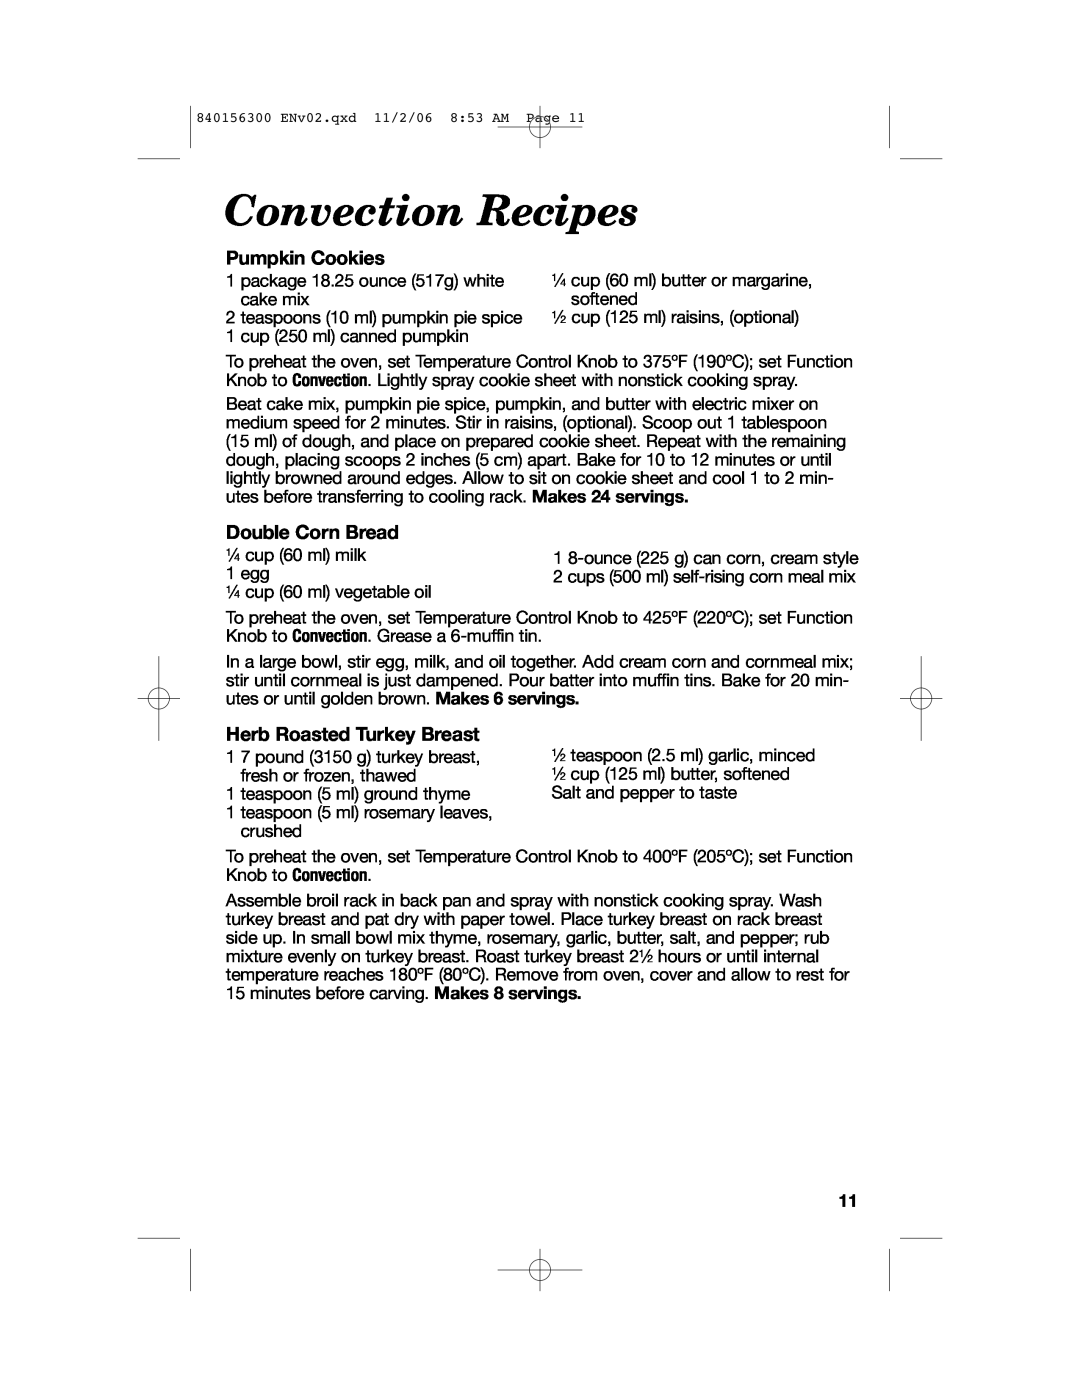 Hamilton Beach 840156300 manual Convection Recipes, Pumpkin Cookies, Double Corn Bread, Herb Roasted Turkey Breast 